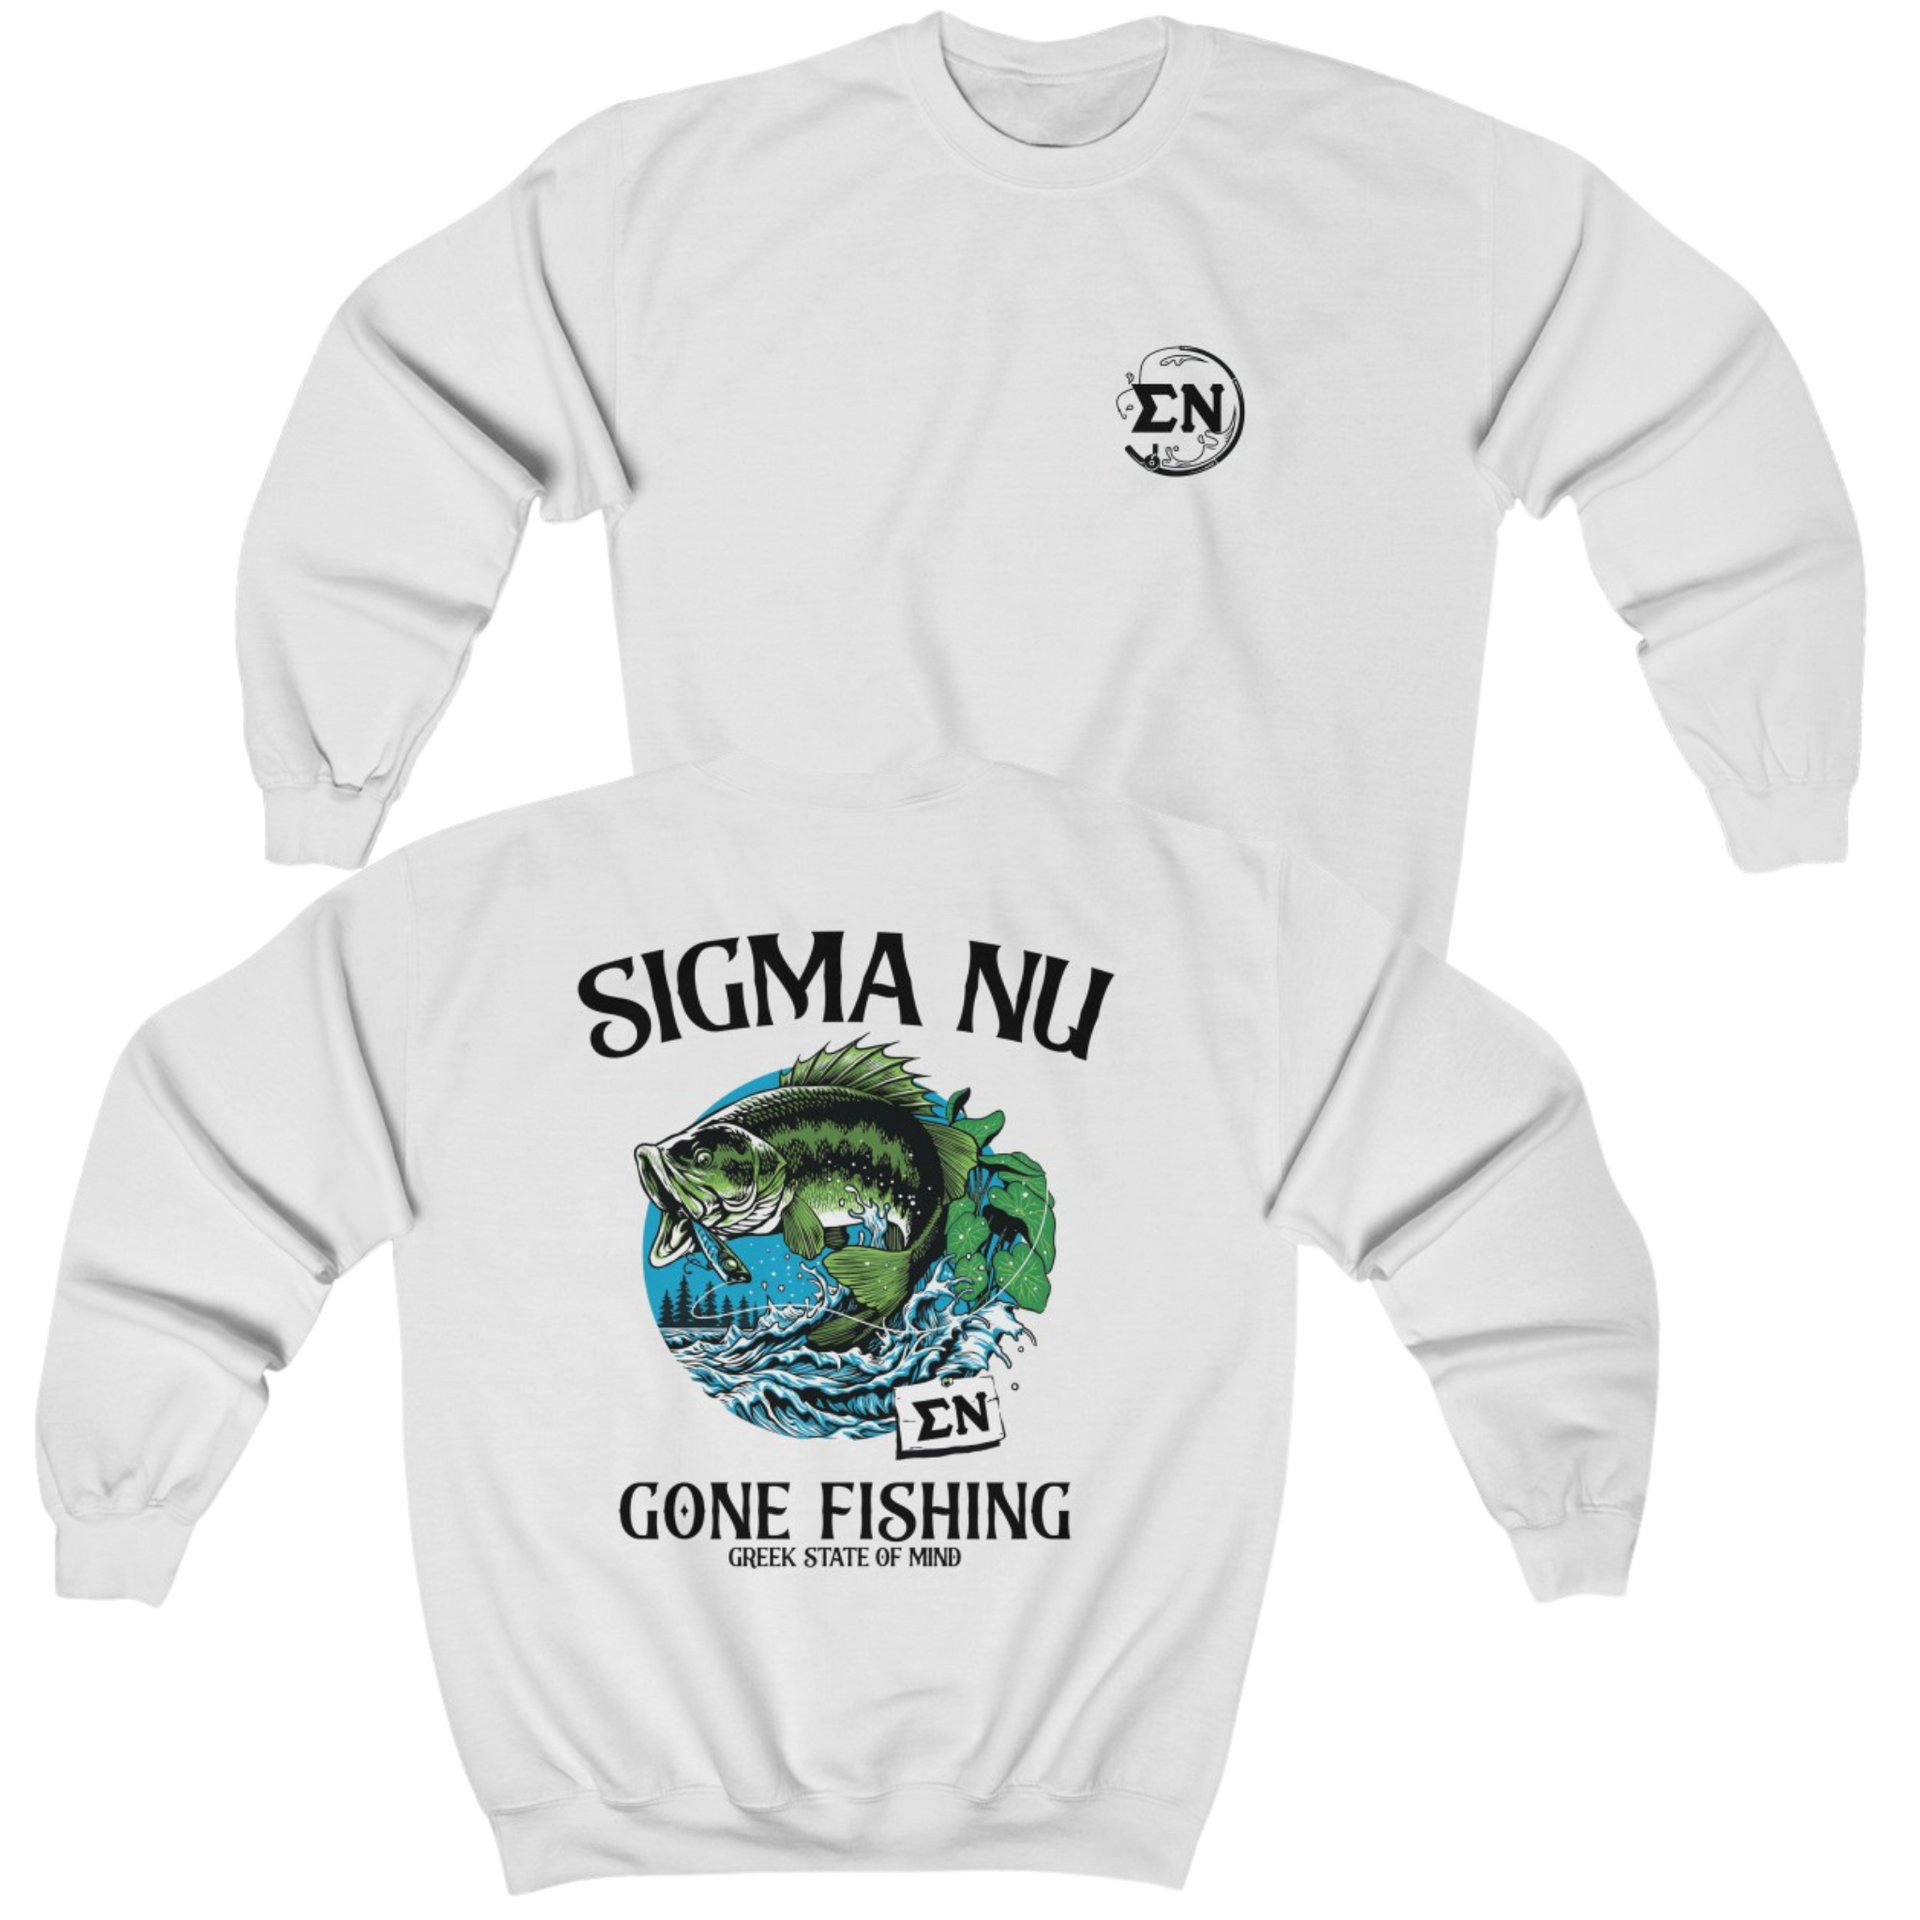 White Sigma Nu Graphic Crewneck Sweatshirt | Gone Fishing | Sigma Nu Clothing, Apparel and Merchandise